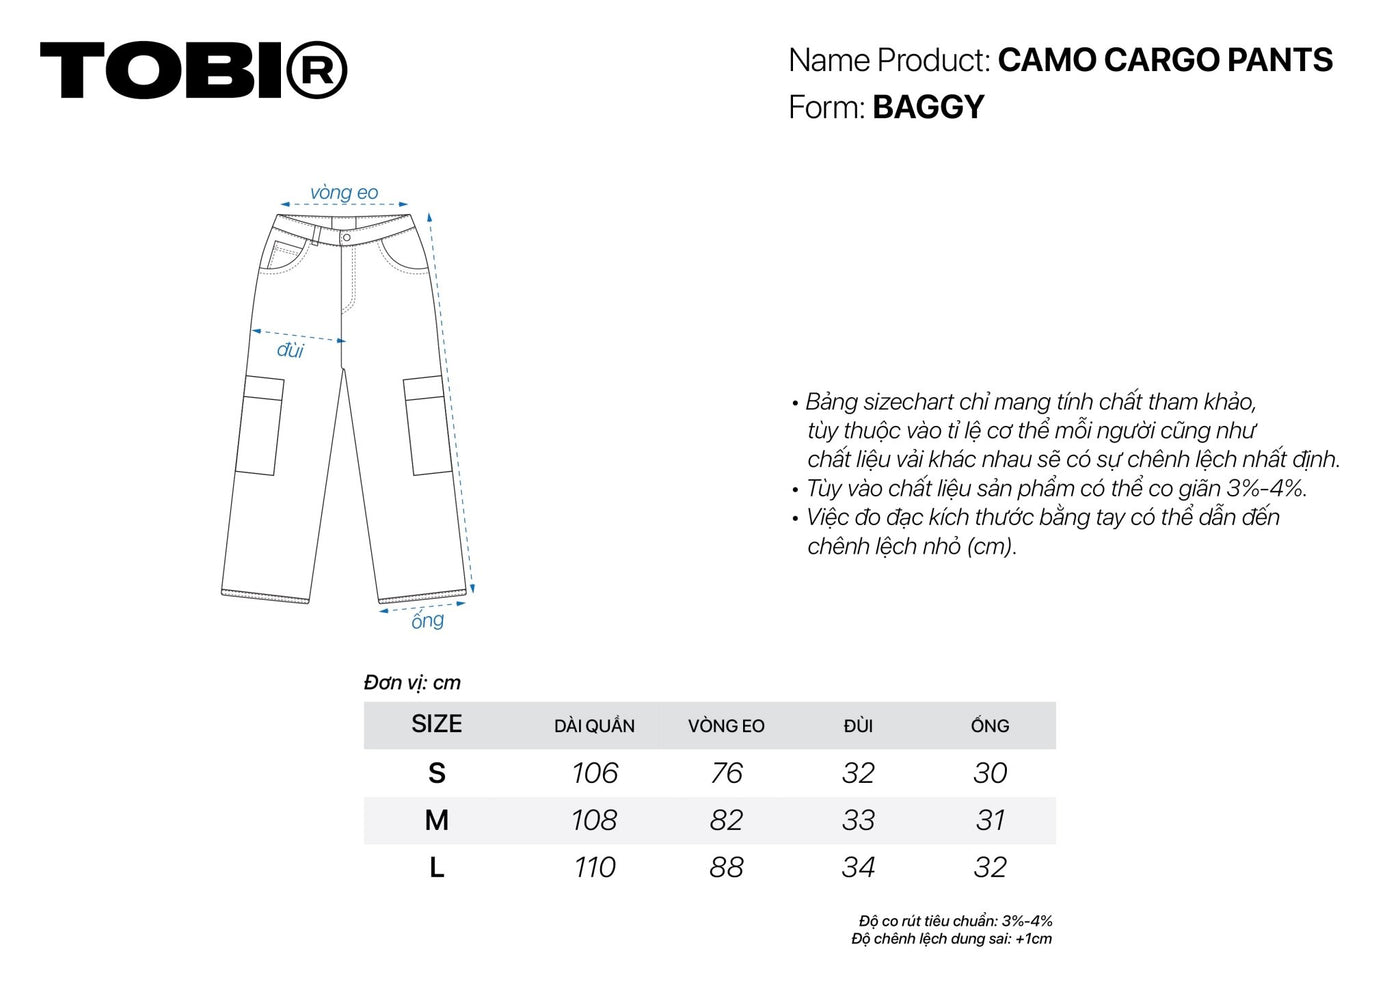 TOBI Camo Cargo Pants - TOBI